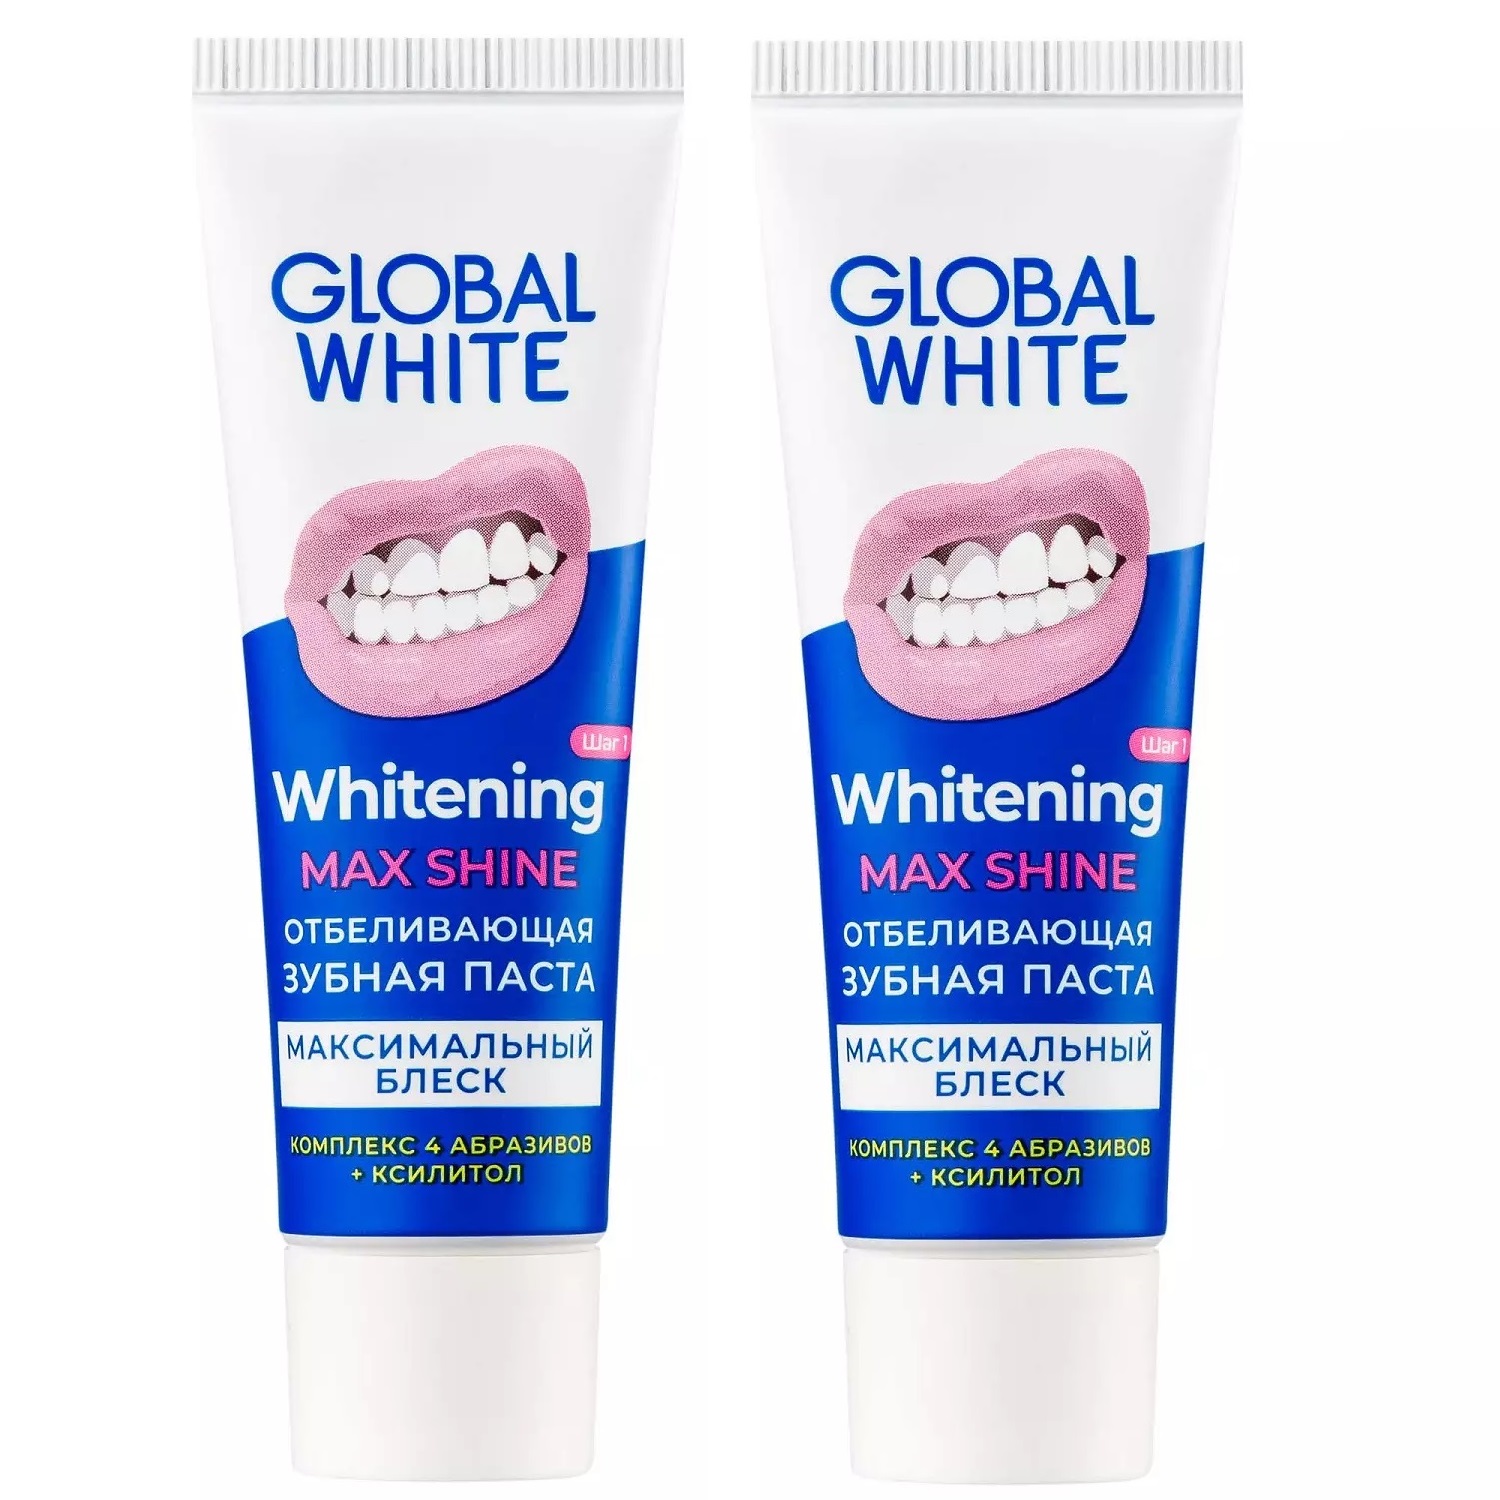 Global White Набор: отбеливающая зубная паста Max Shine, 2 х 30 мл (Global White, Подготовка к отбеливанию) global white набор отбеливающая зубная паста extra whitening 2 х 30 мл global white подготовка к отбеливанию